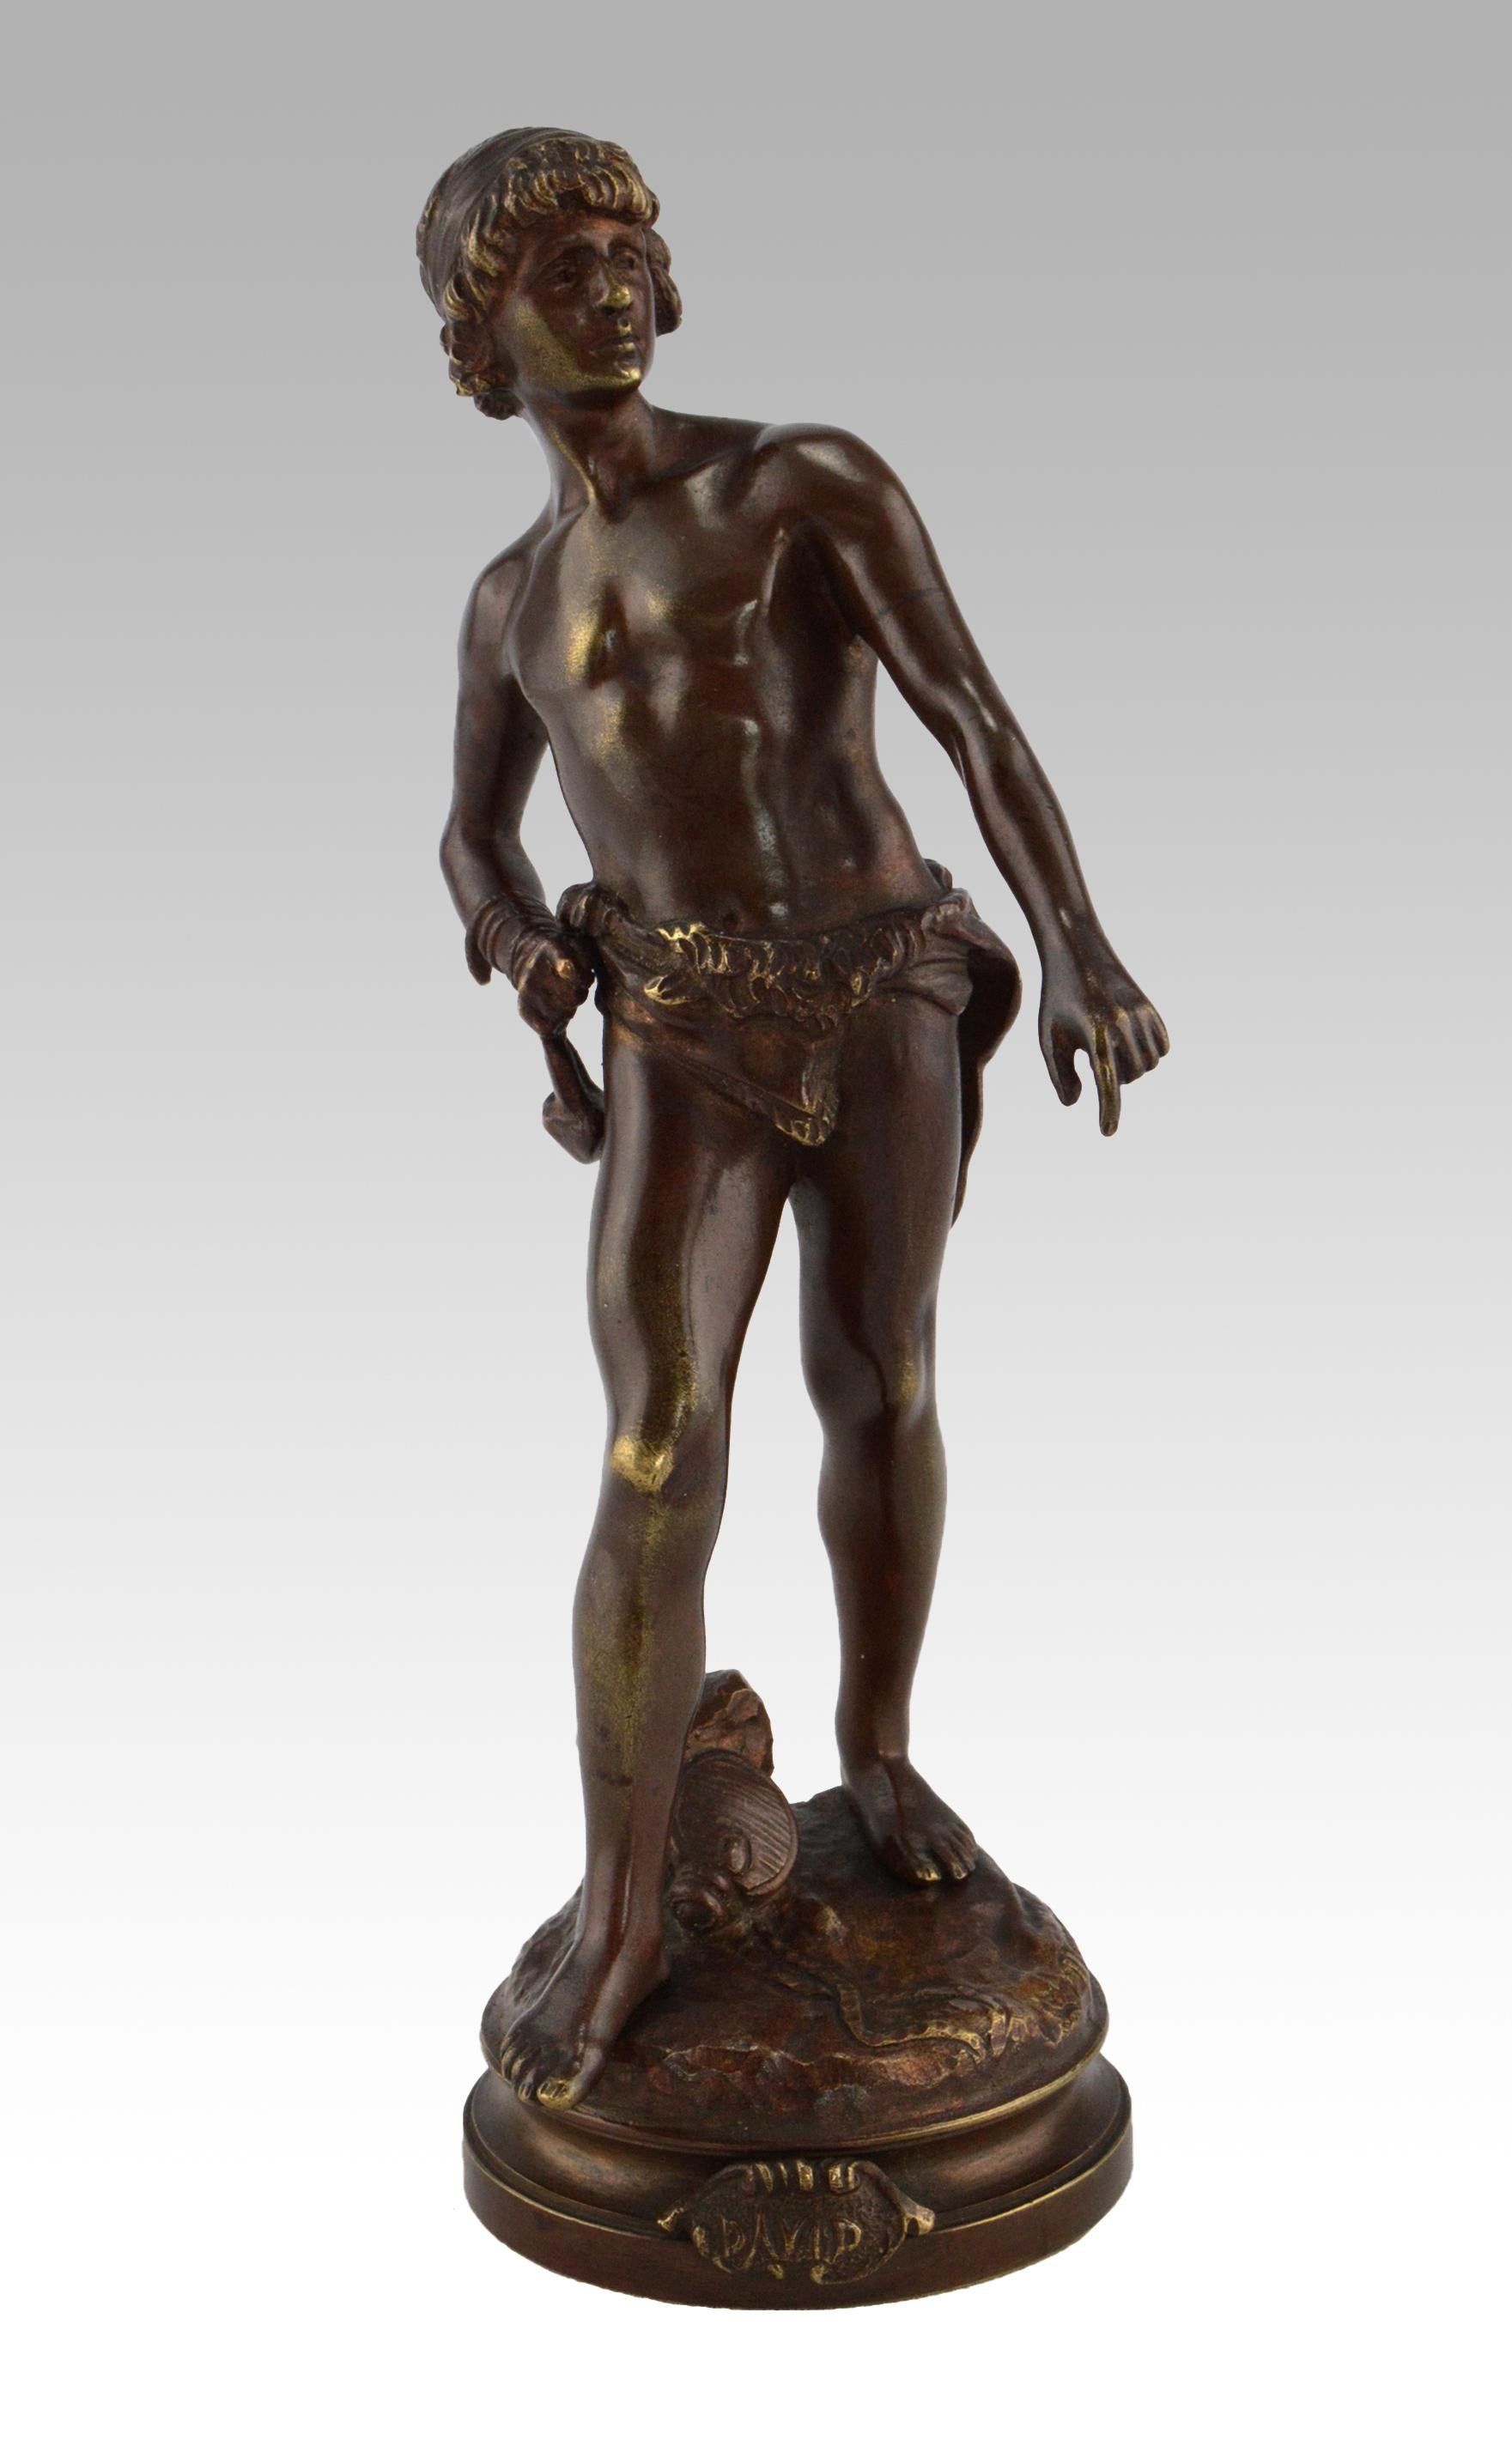 19th Century bronze sculpture of David